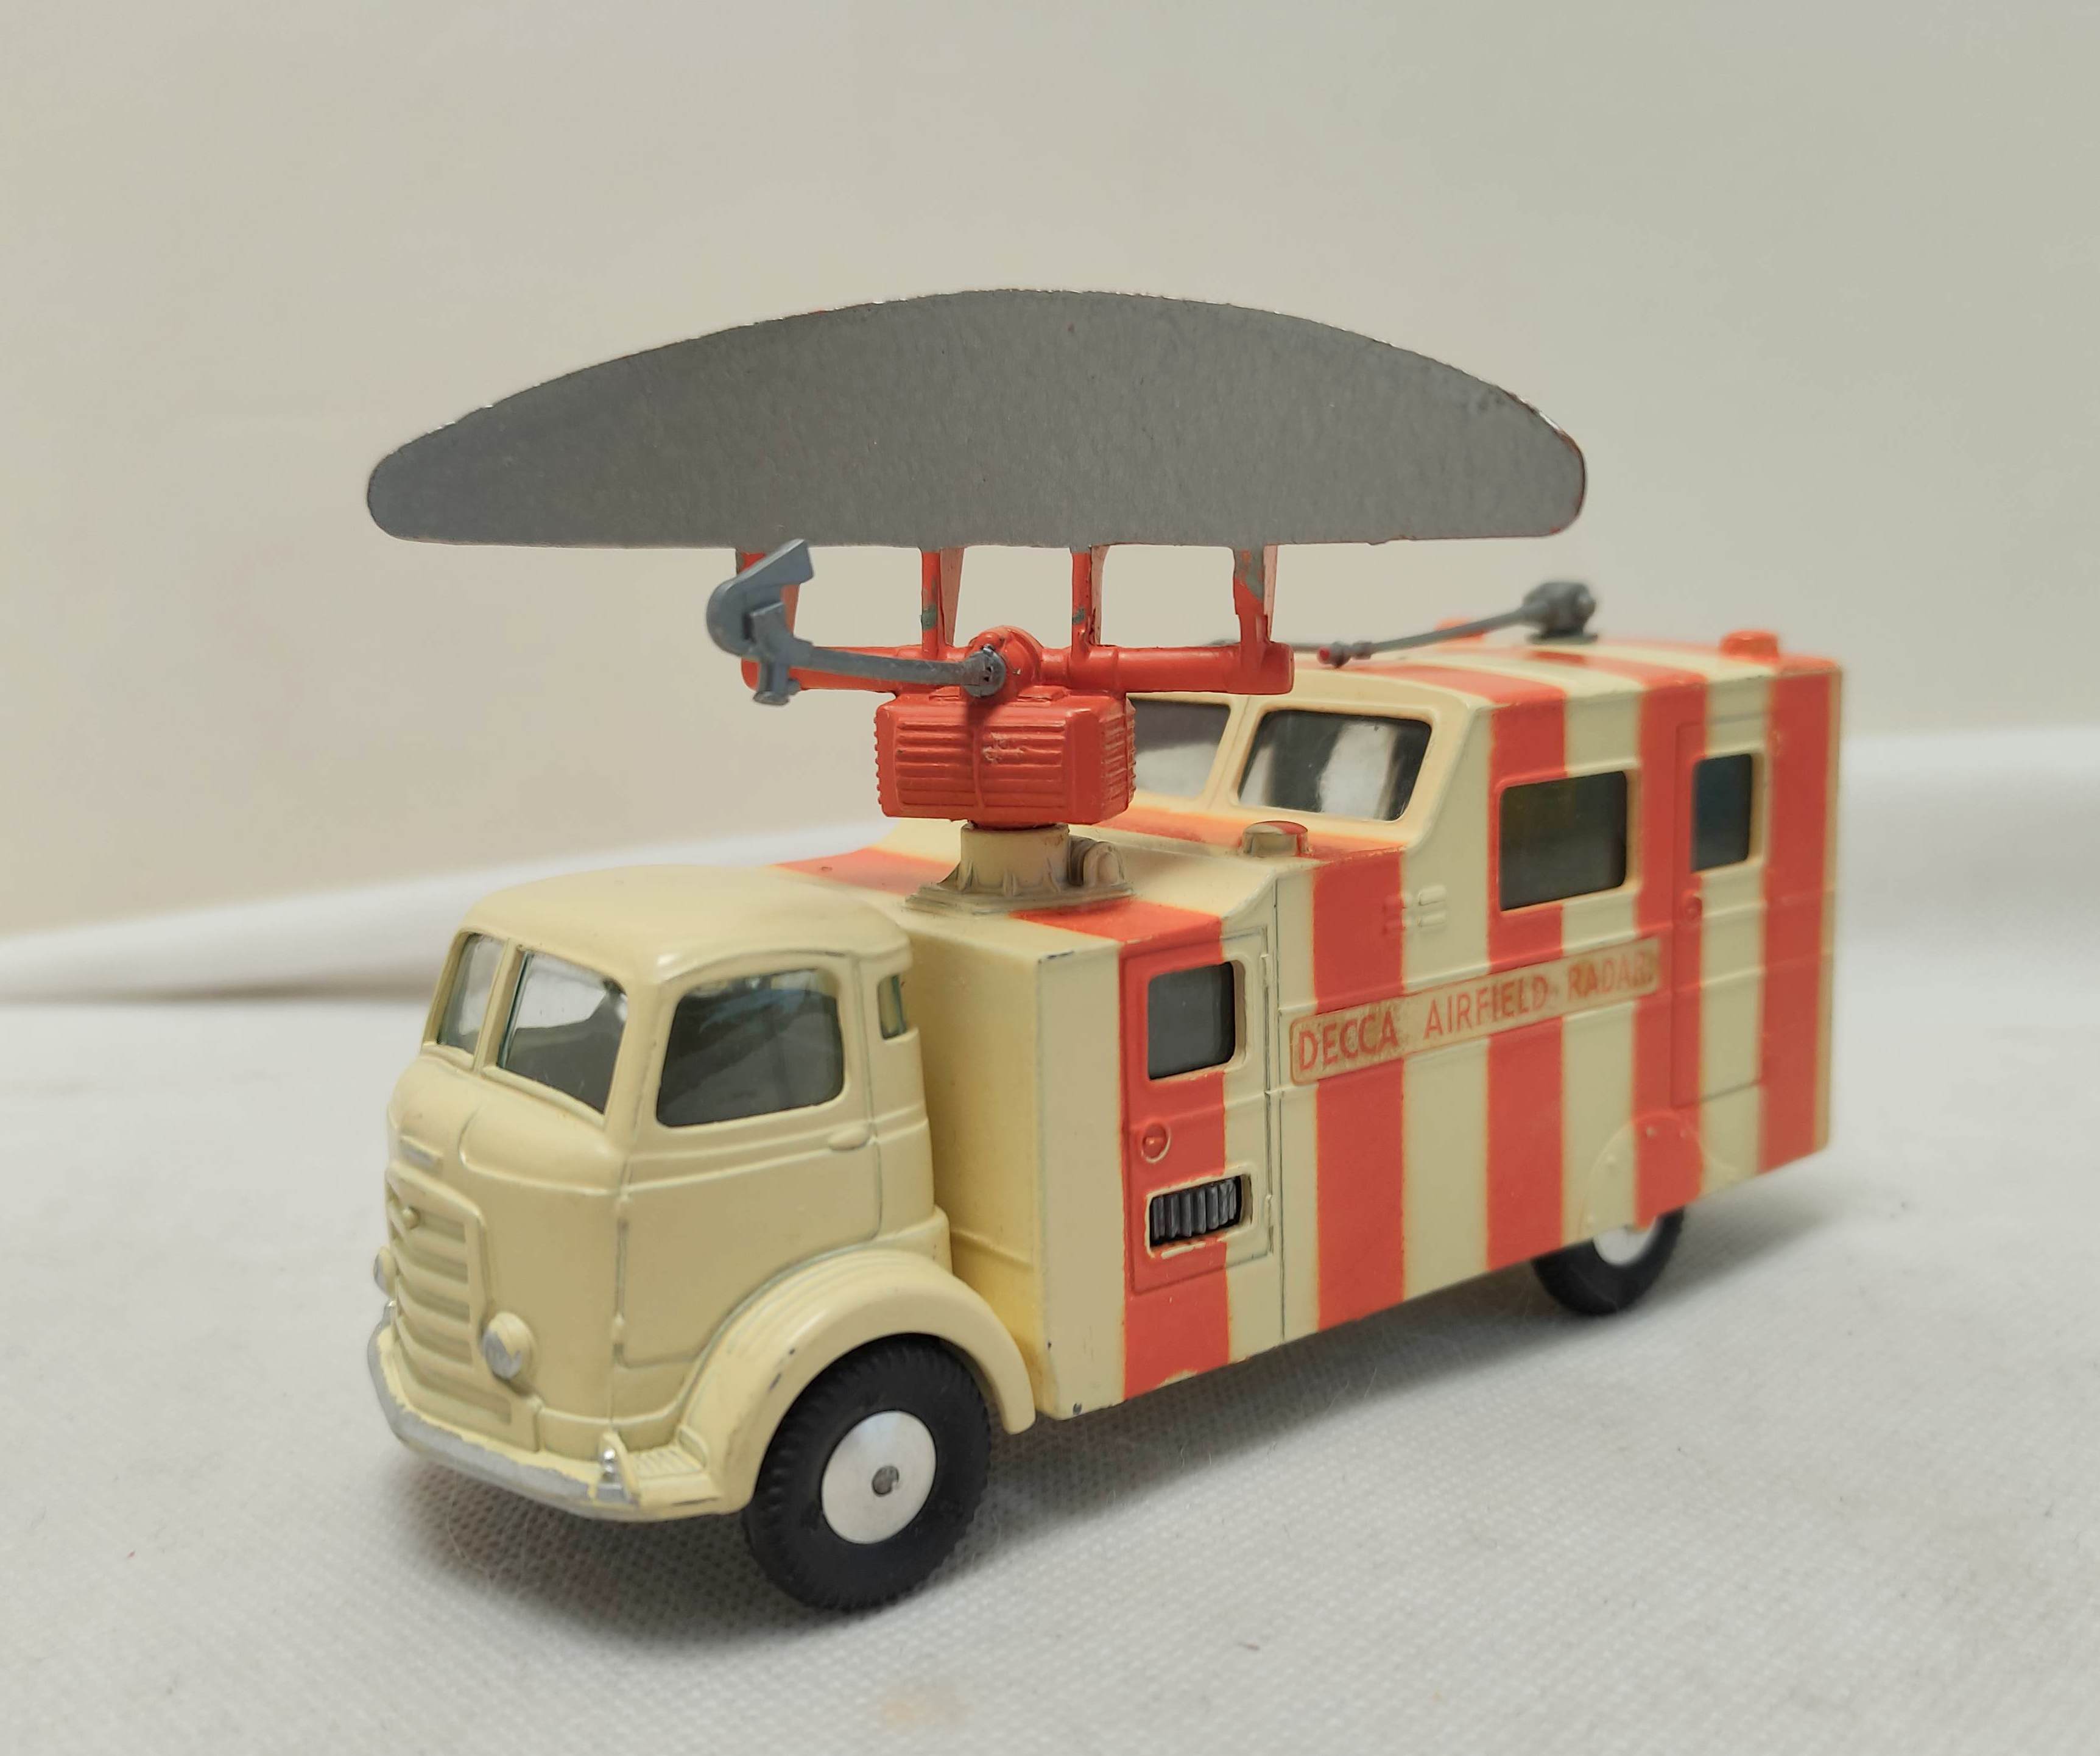 Corgi Toys Major model No 1106 "Decca" Mobile Airfield Radar Van with original box and Corgi "Rocket - Image 4 of 9